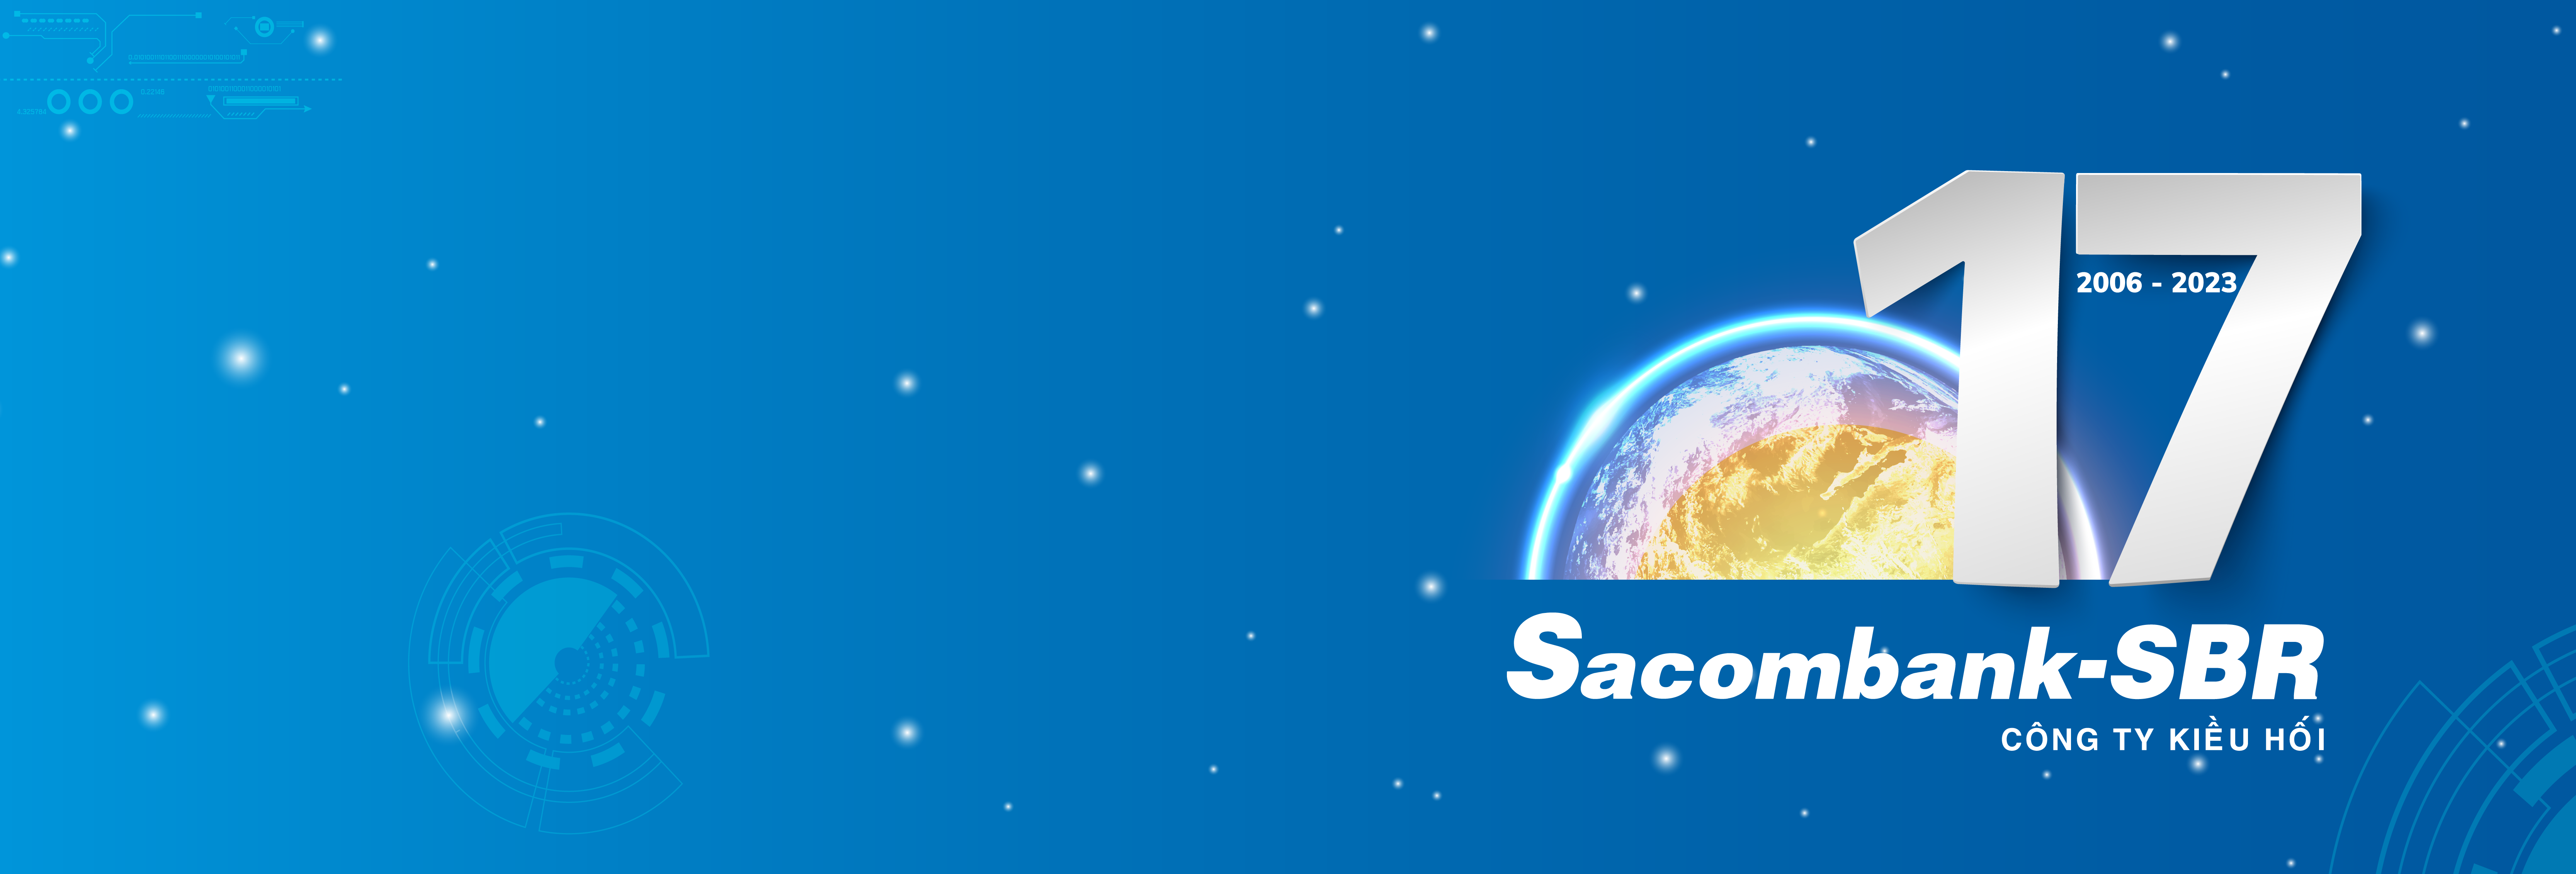 Banner sinh nhật lần thứ 17 - Sacombank-SBR